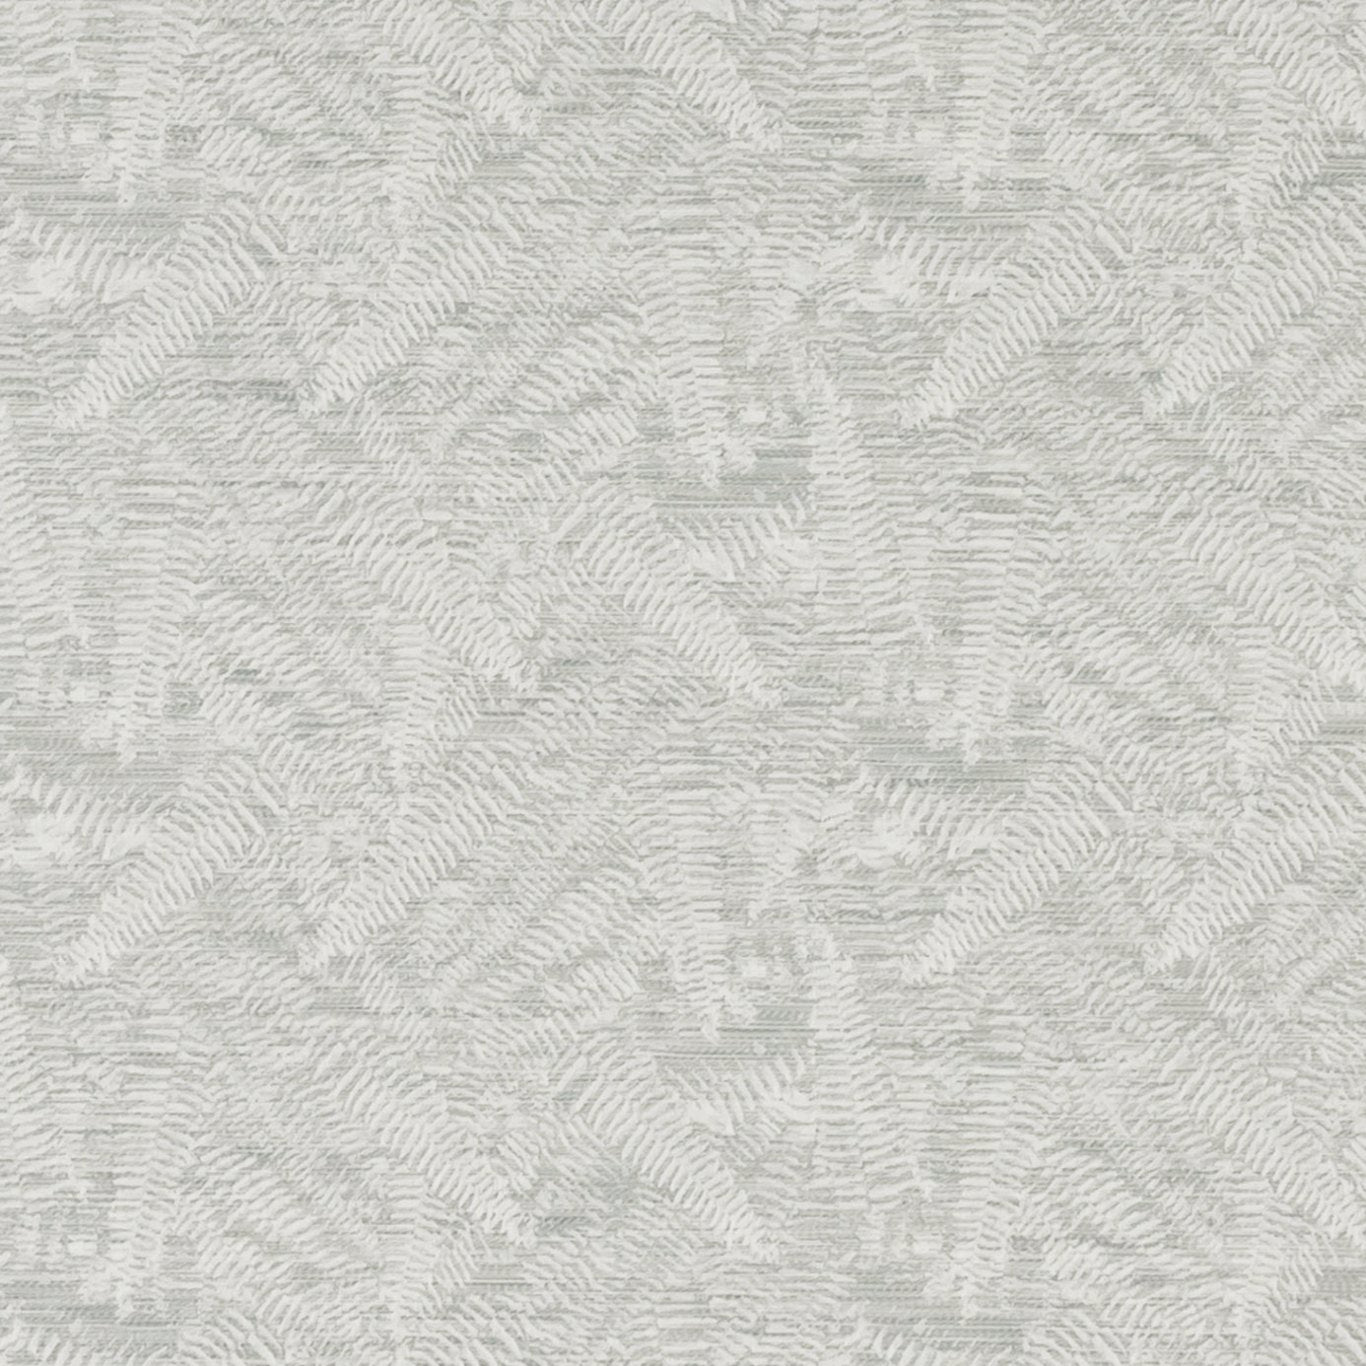 Arbor Fabric by Clarke & Clarke - F1404/04 - Silver